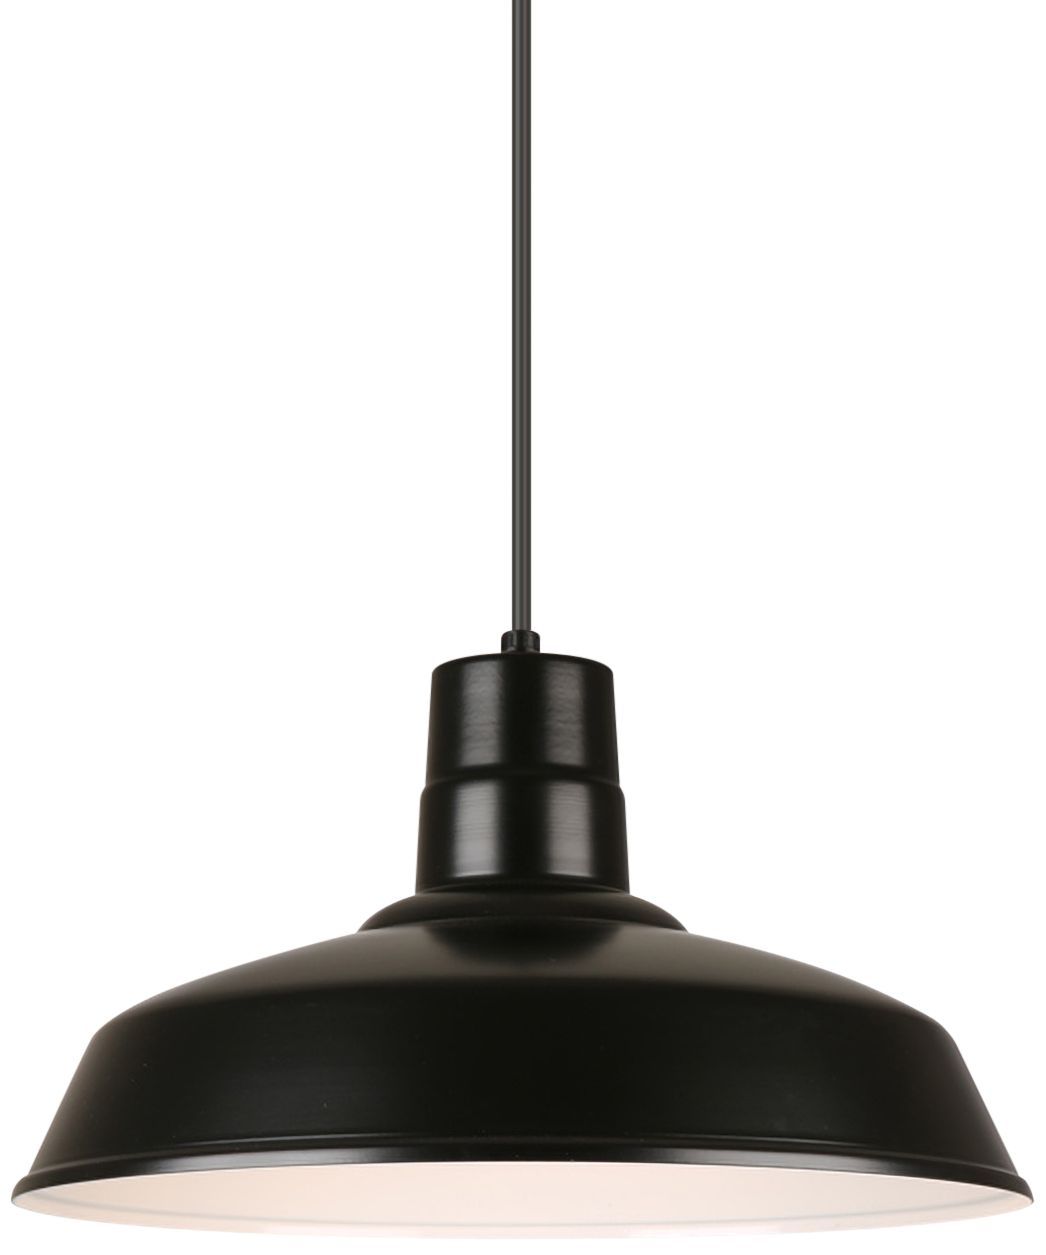 CIP 16” Matte Black Warehouse Style Pendant Shade Fixture Indoor Industrial NEW 